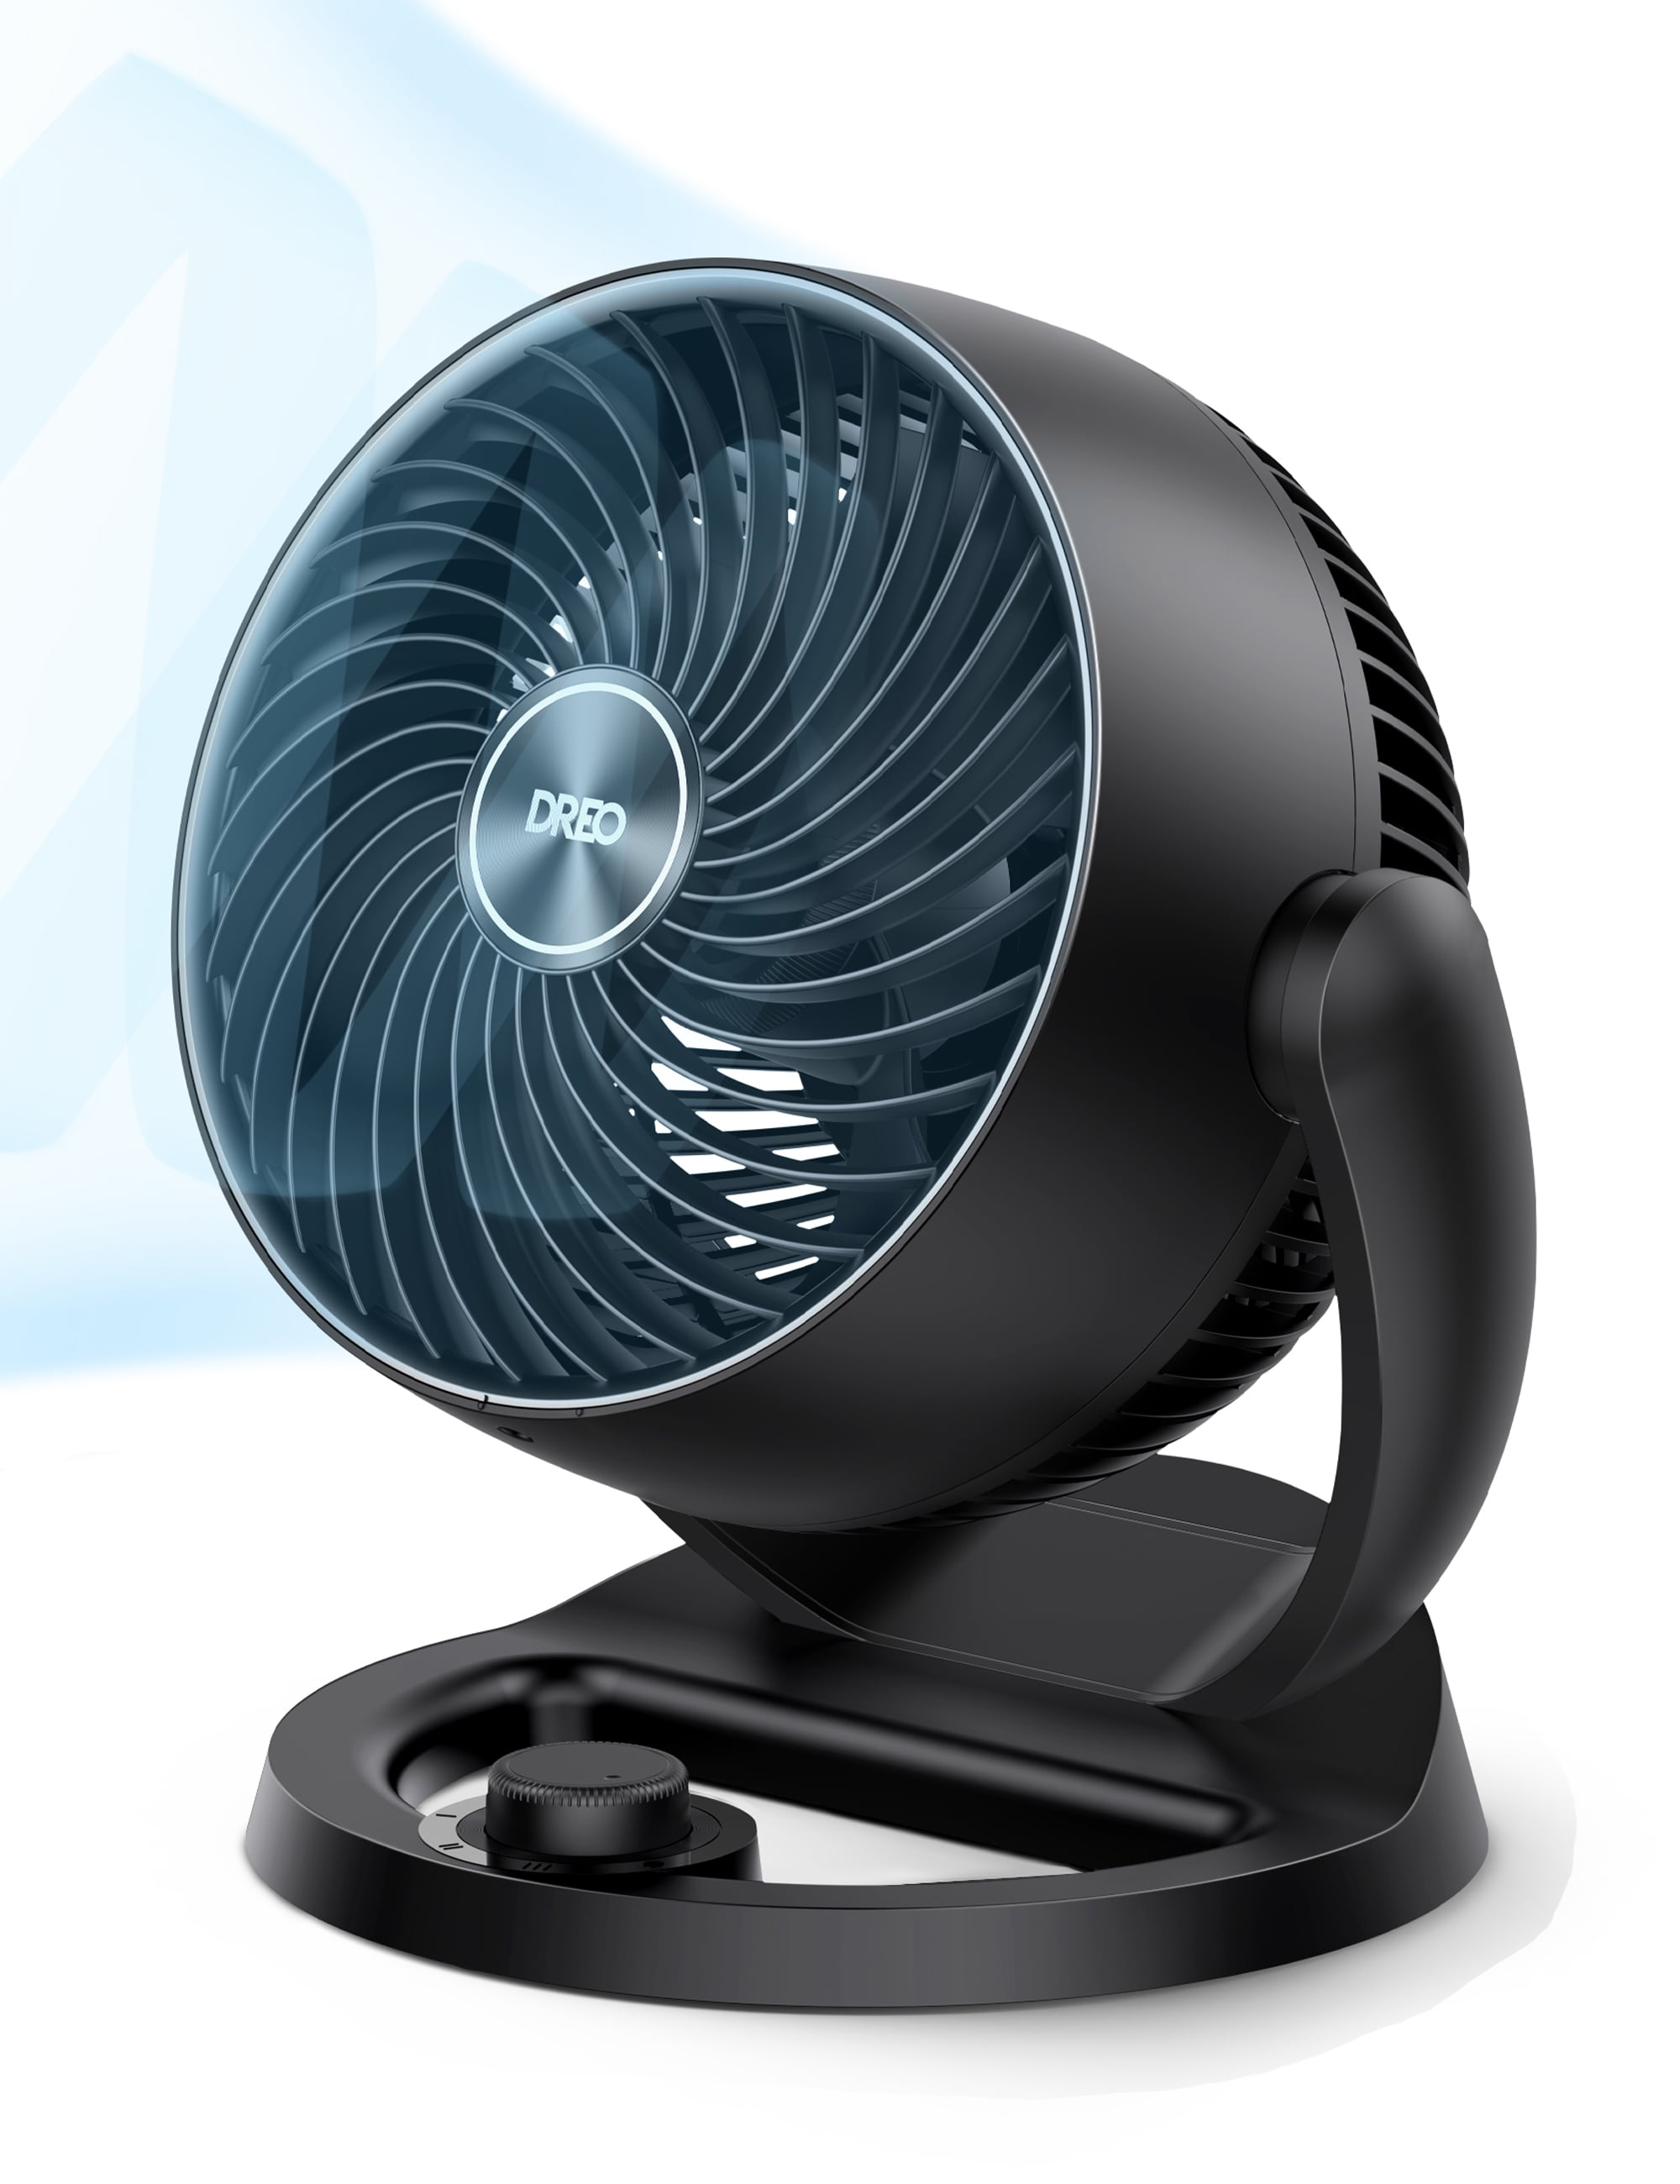 Dreo Desk Fans Home Whole Room Air Circulator Fan 70ft Strong Airflow 120 Adjustable Tilt 28db Low Noise Quiet 3 Speeds 9 Table Fan Office Bedroom Dc349c84 2c3b 4f5b A2f9 43cc6ba7e4d8.8e9129fe8a2764db7829e020ffc2f3cc 